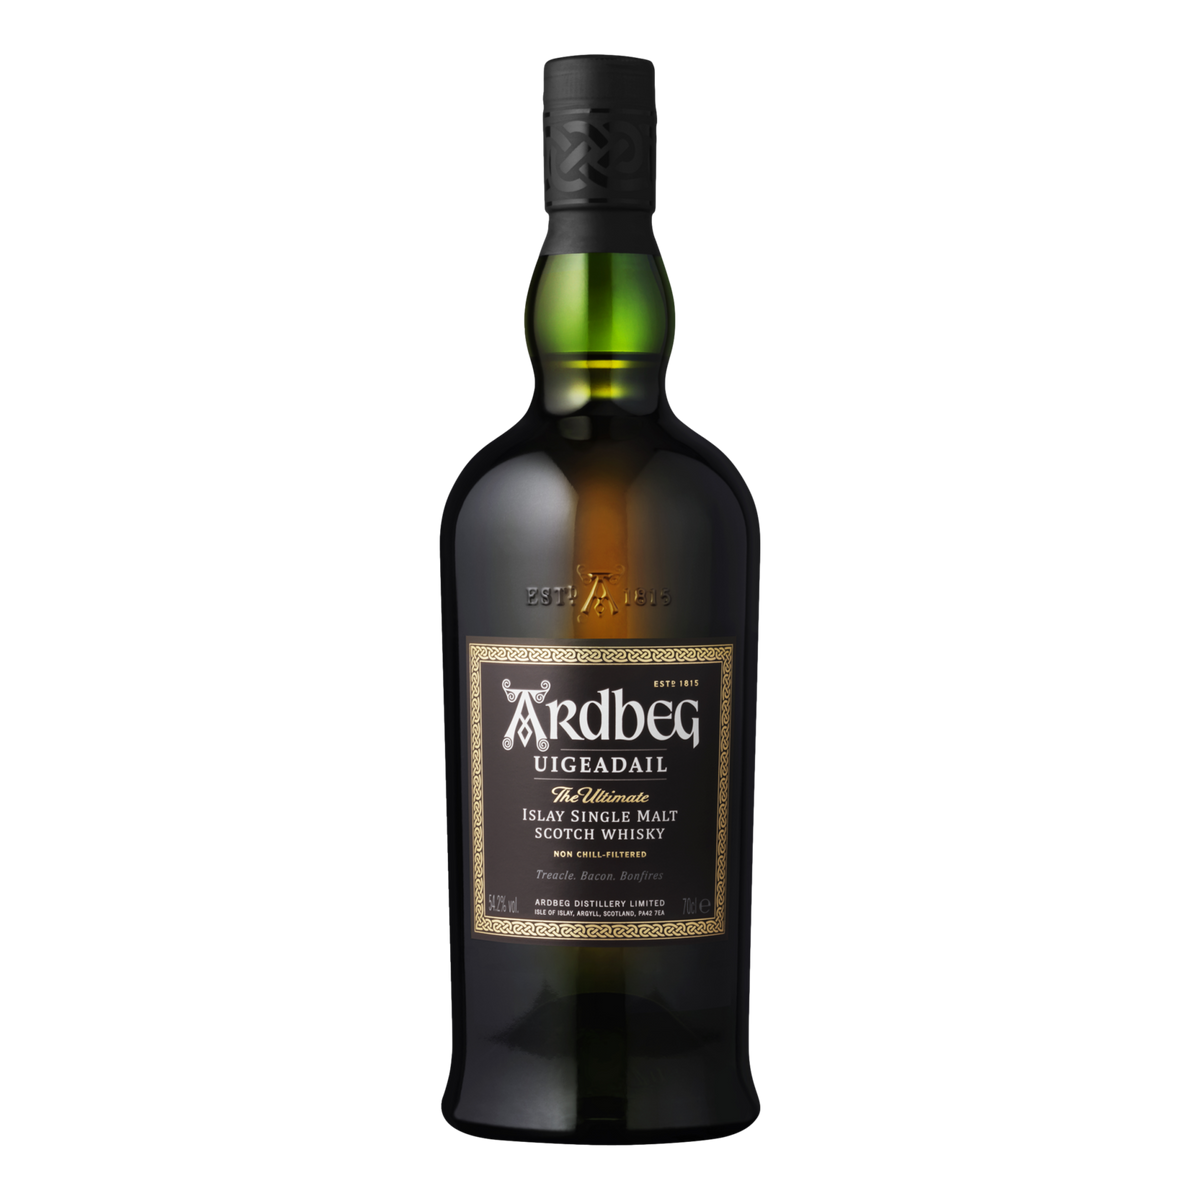 Ardbeg Islay Single Malt Scotch Whisky Uigeadail 700ml - Camperdown Cellars